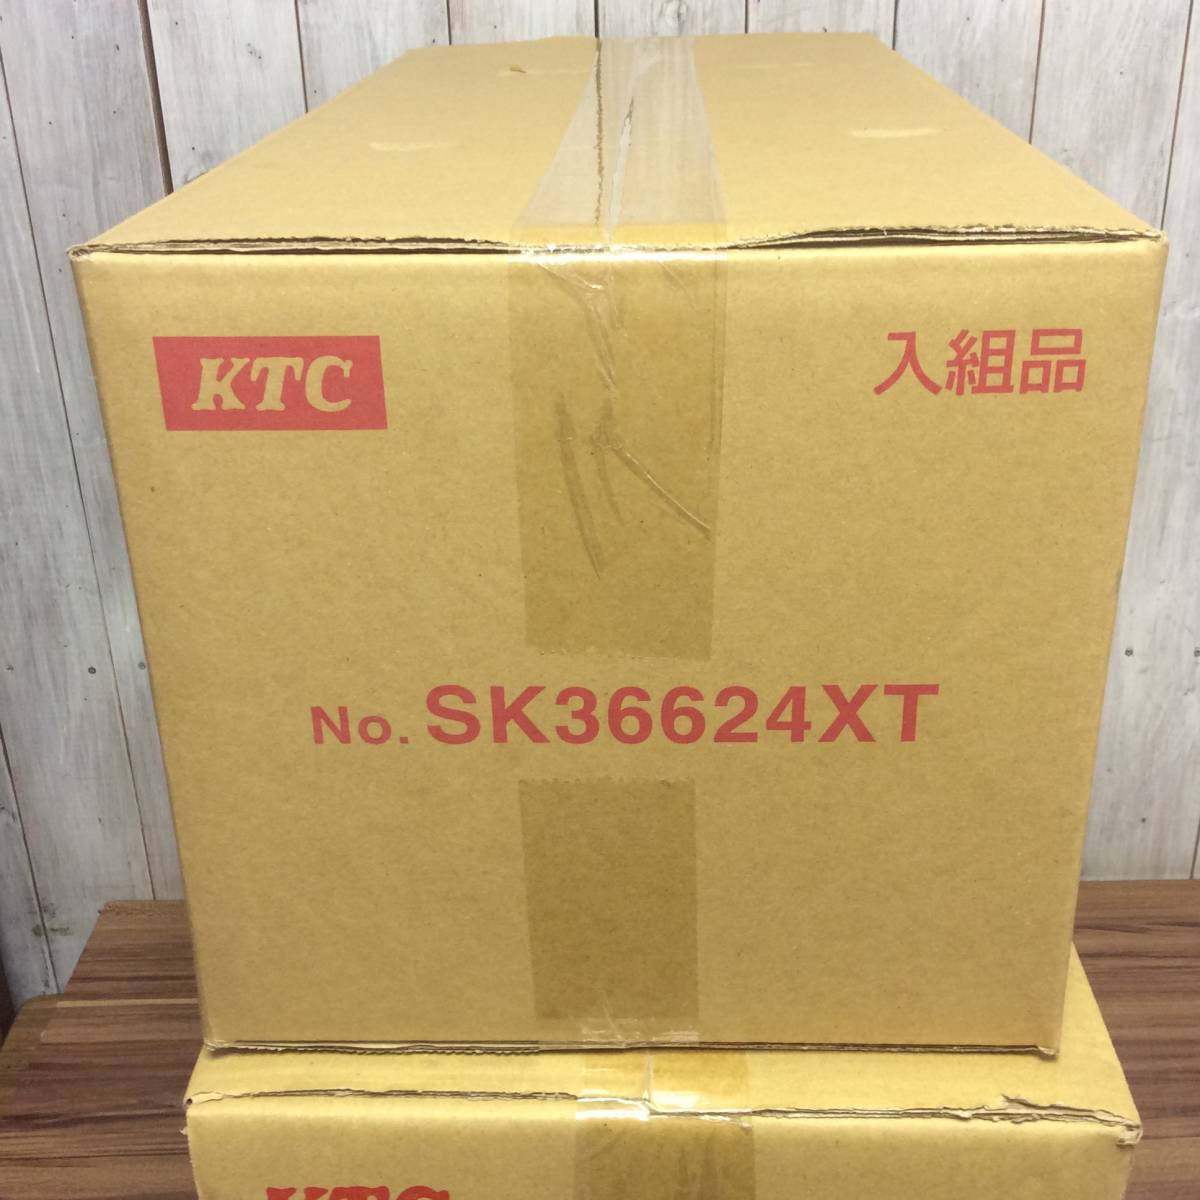 【TH-0334】未使用 KTC 京都機械 ツールセット SK36624XT ツールボックス SKX0213BK【2梱包】_画像3